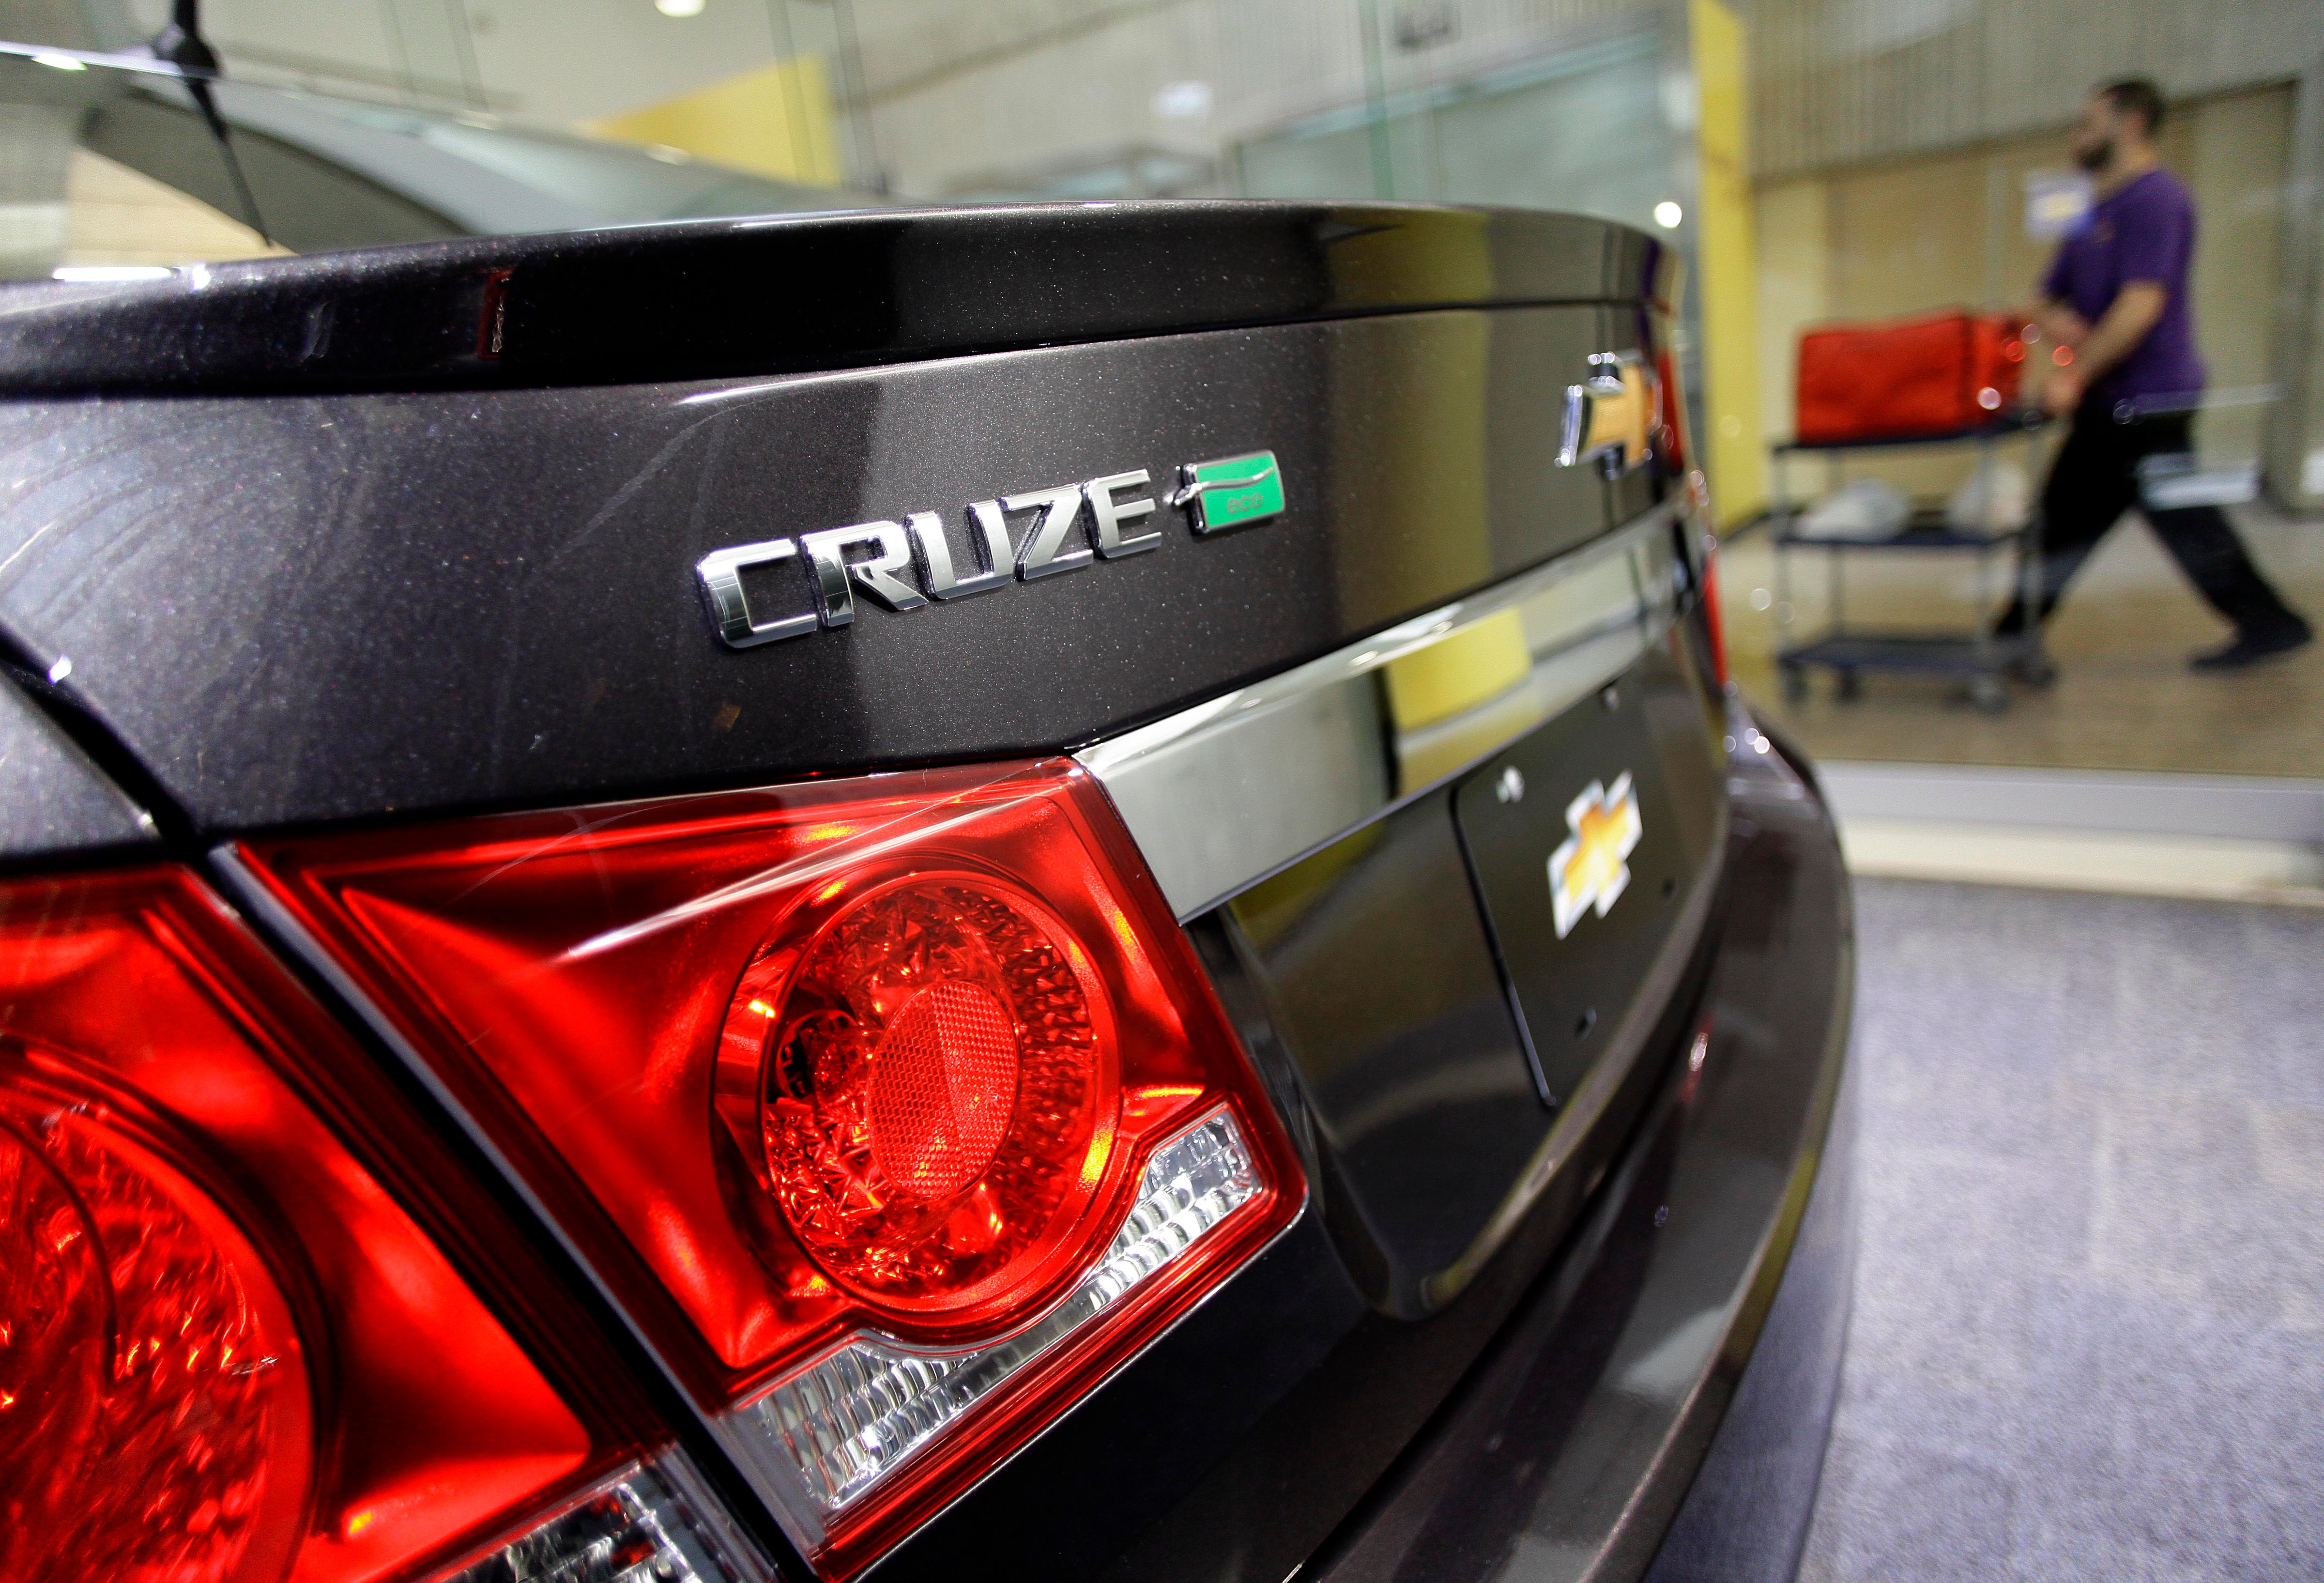 A man walks past a Chevrolet Cruze Eco displayed at the General Motors headquarters April 1, 2014 in Detroit, Michigan. (Joshua Lott&mdash;Getty Images)